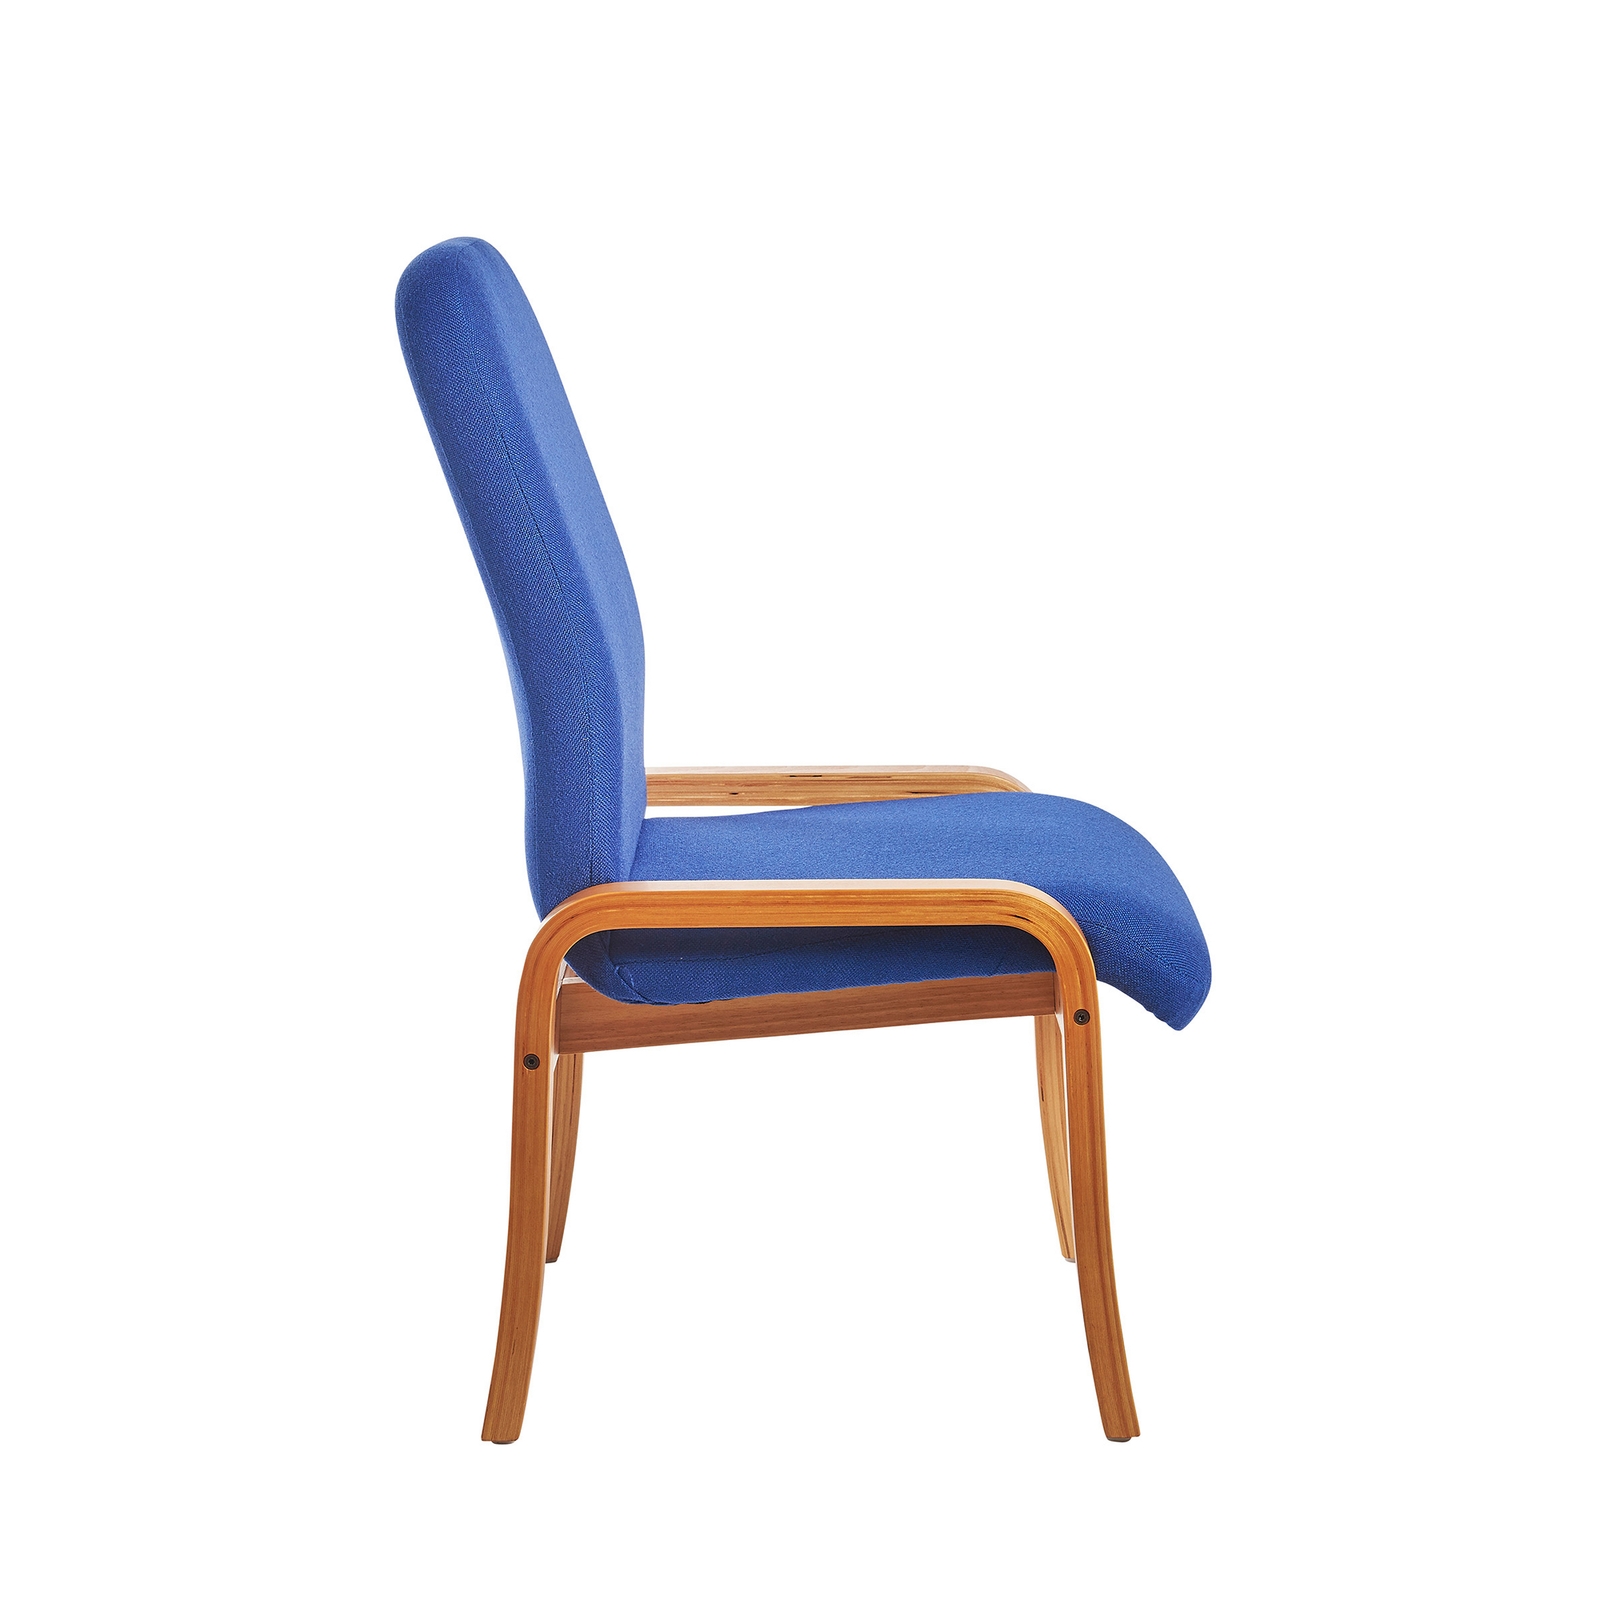 Yealm chair - Blue